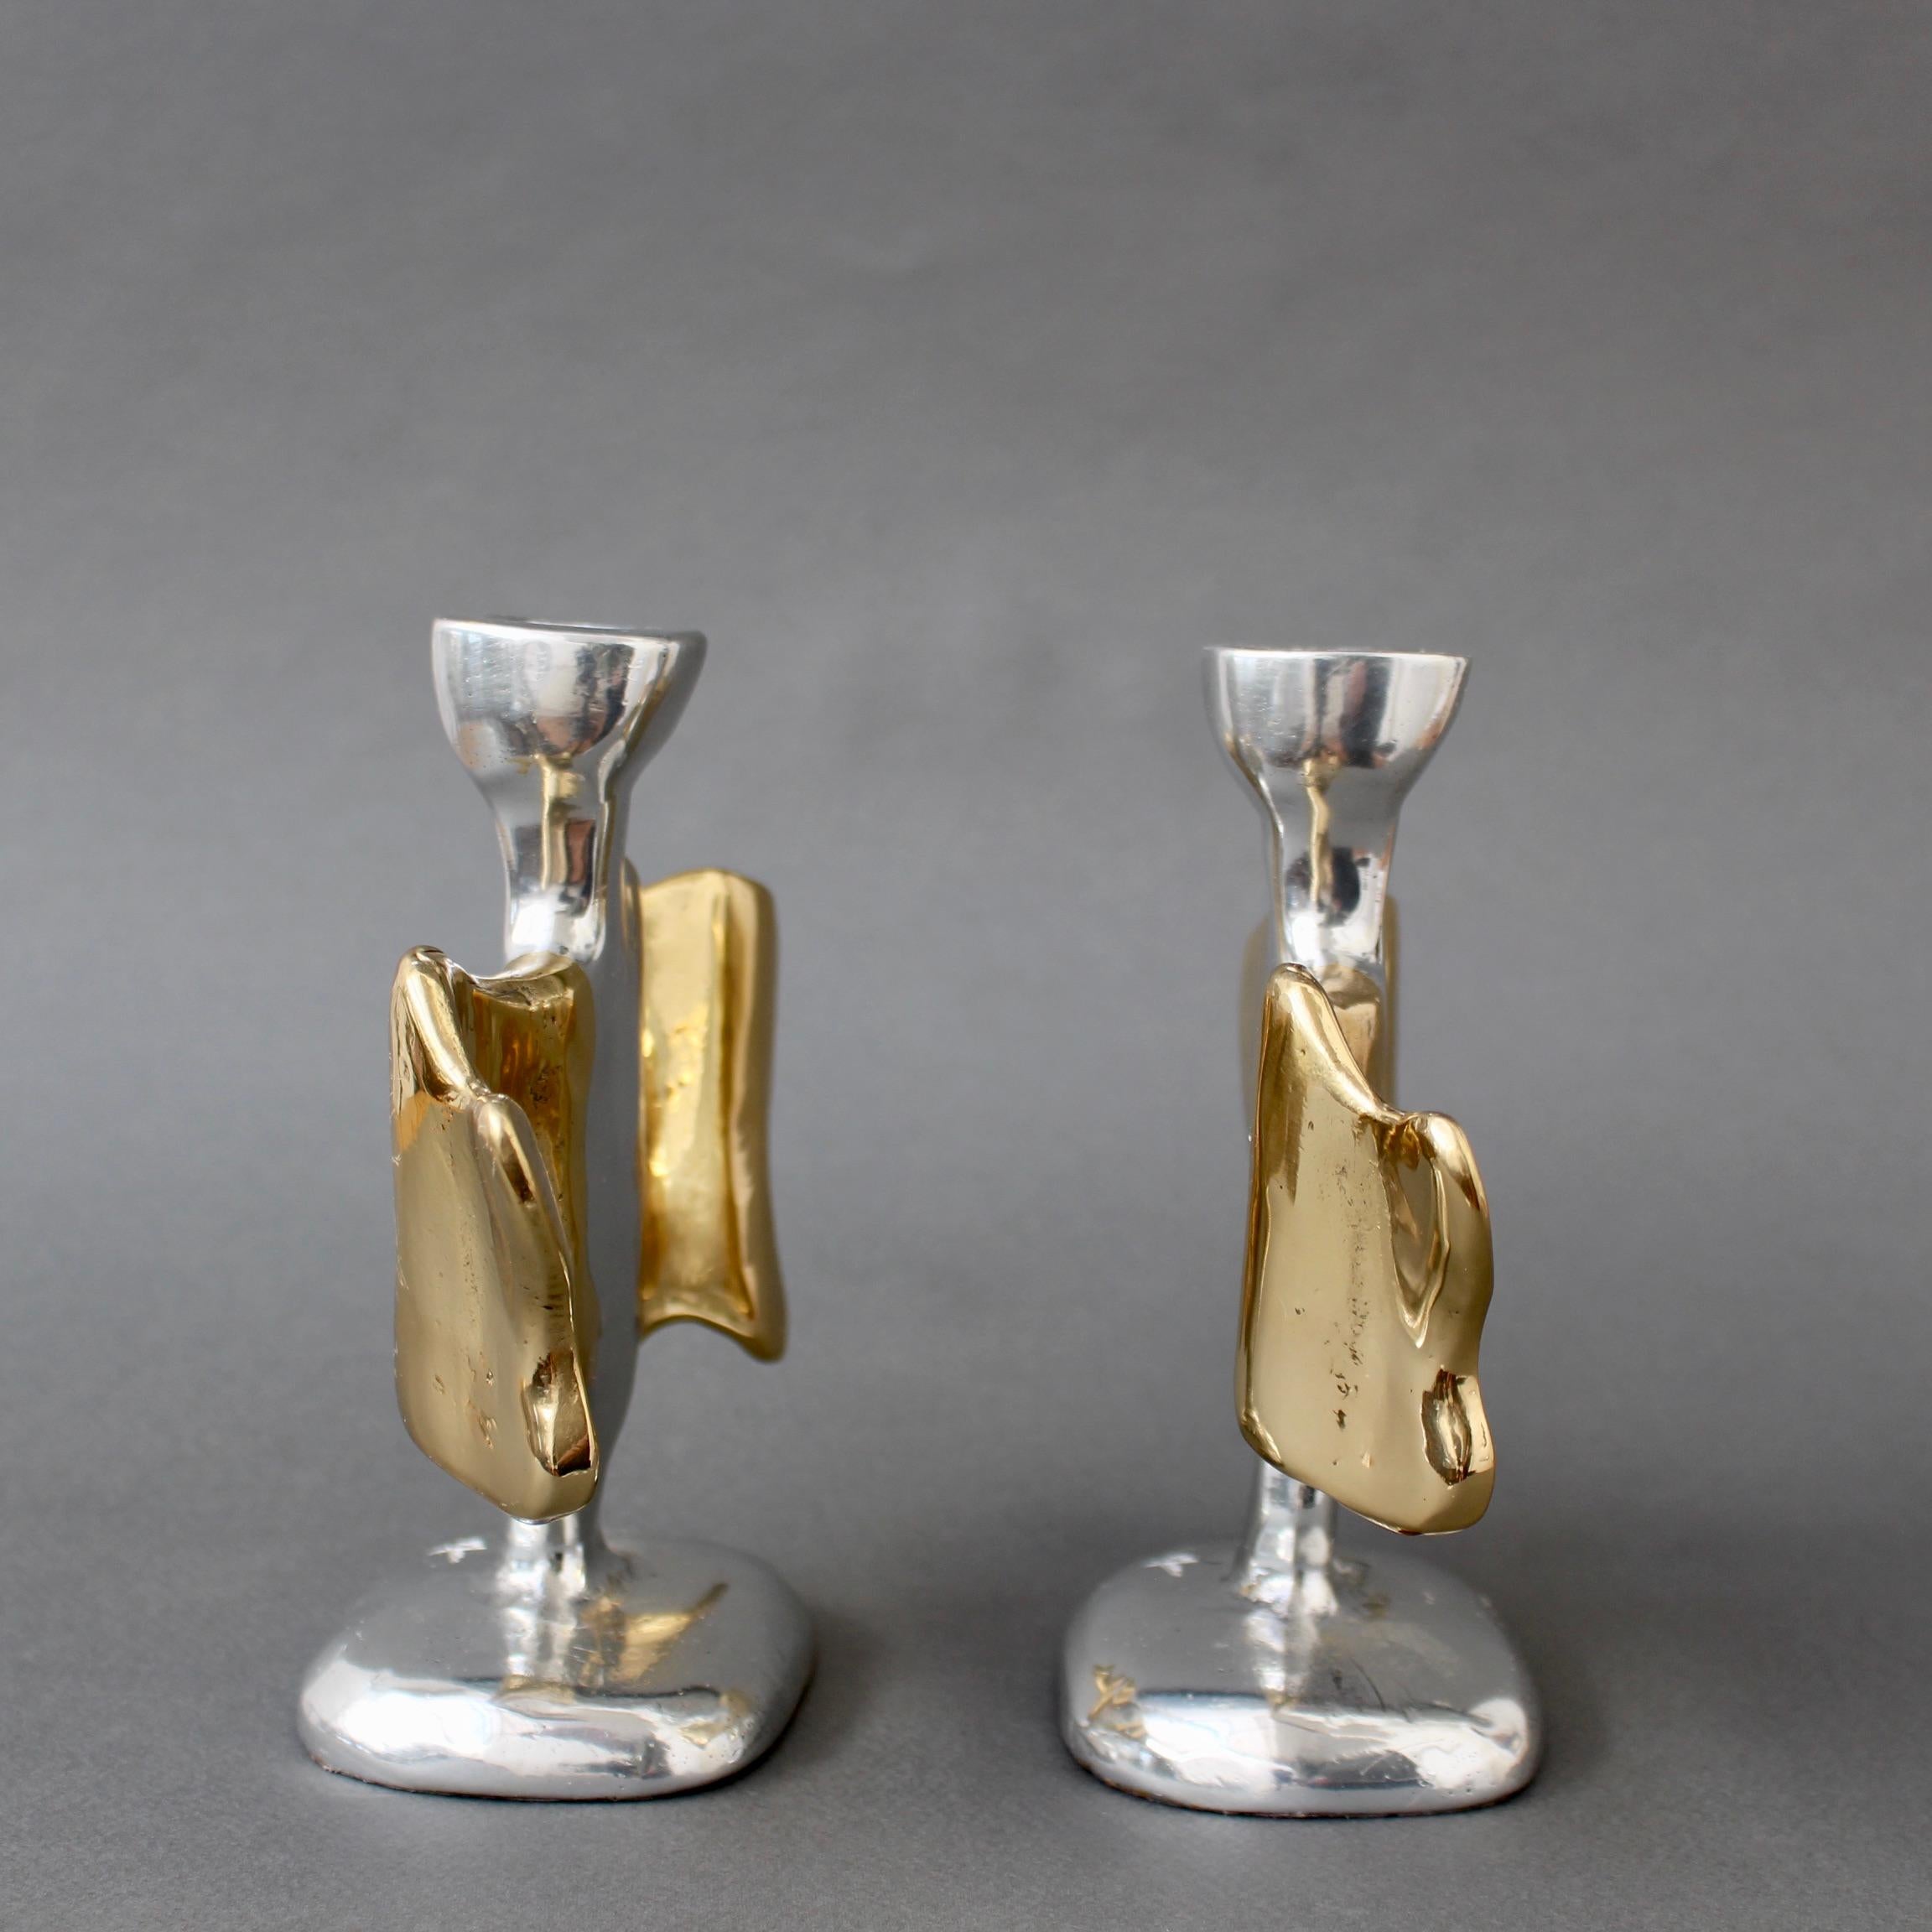 Spanish Pair of Brutalist Aluminium and Brass Candlesticks by David Marshall circa 1990s